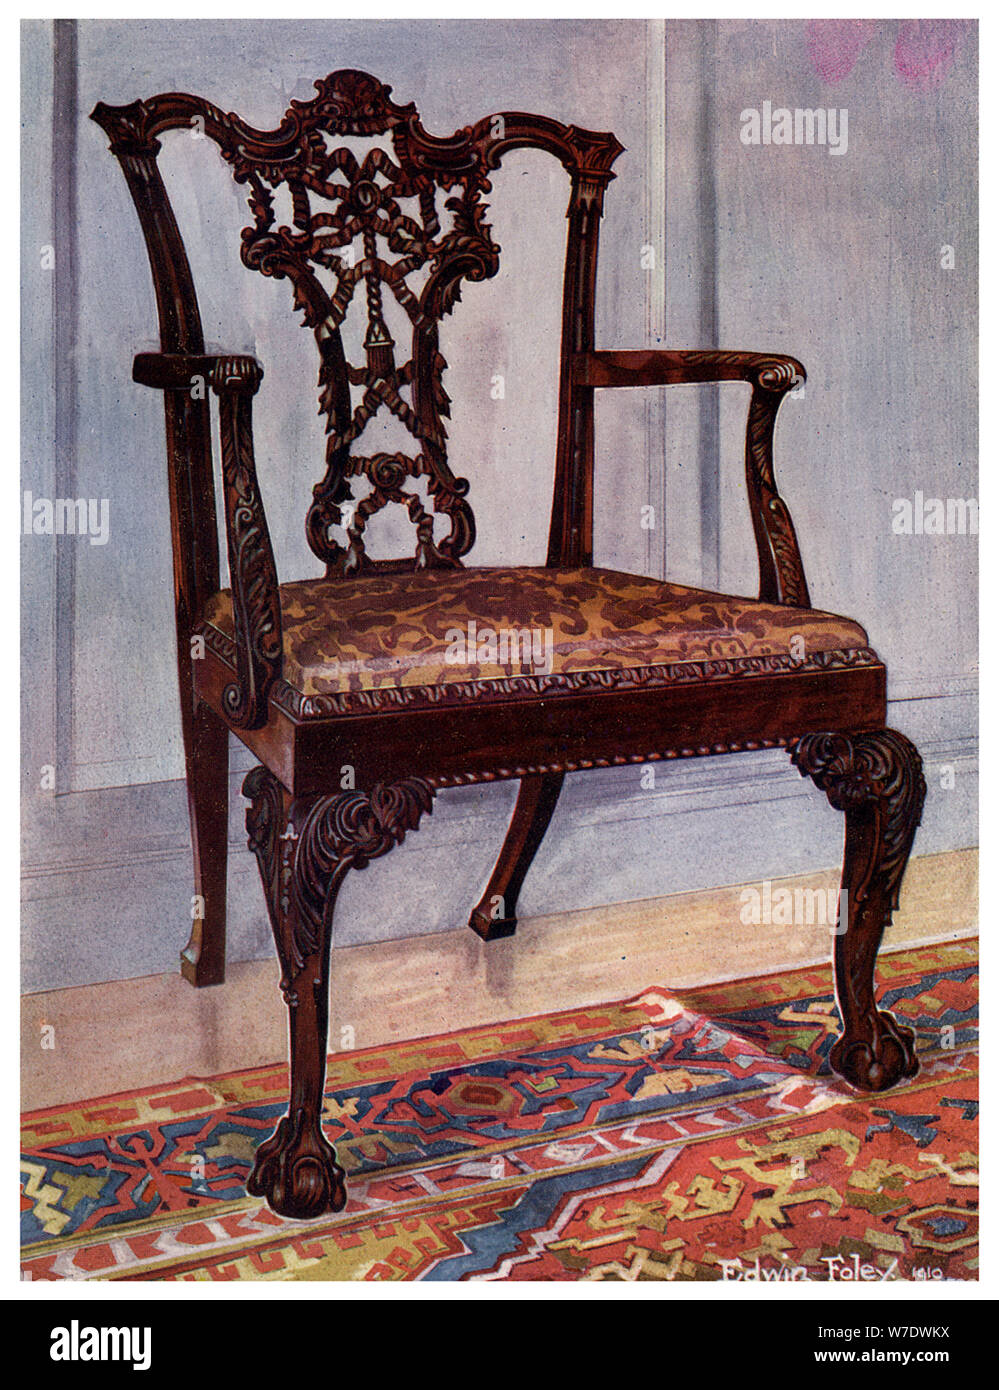 original chippendale furniture